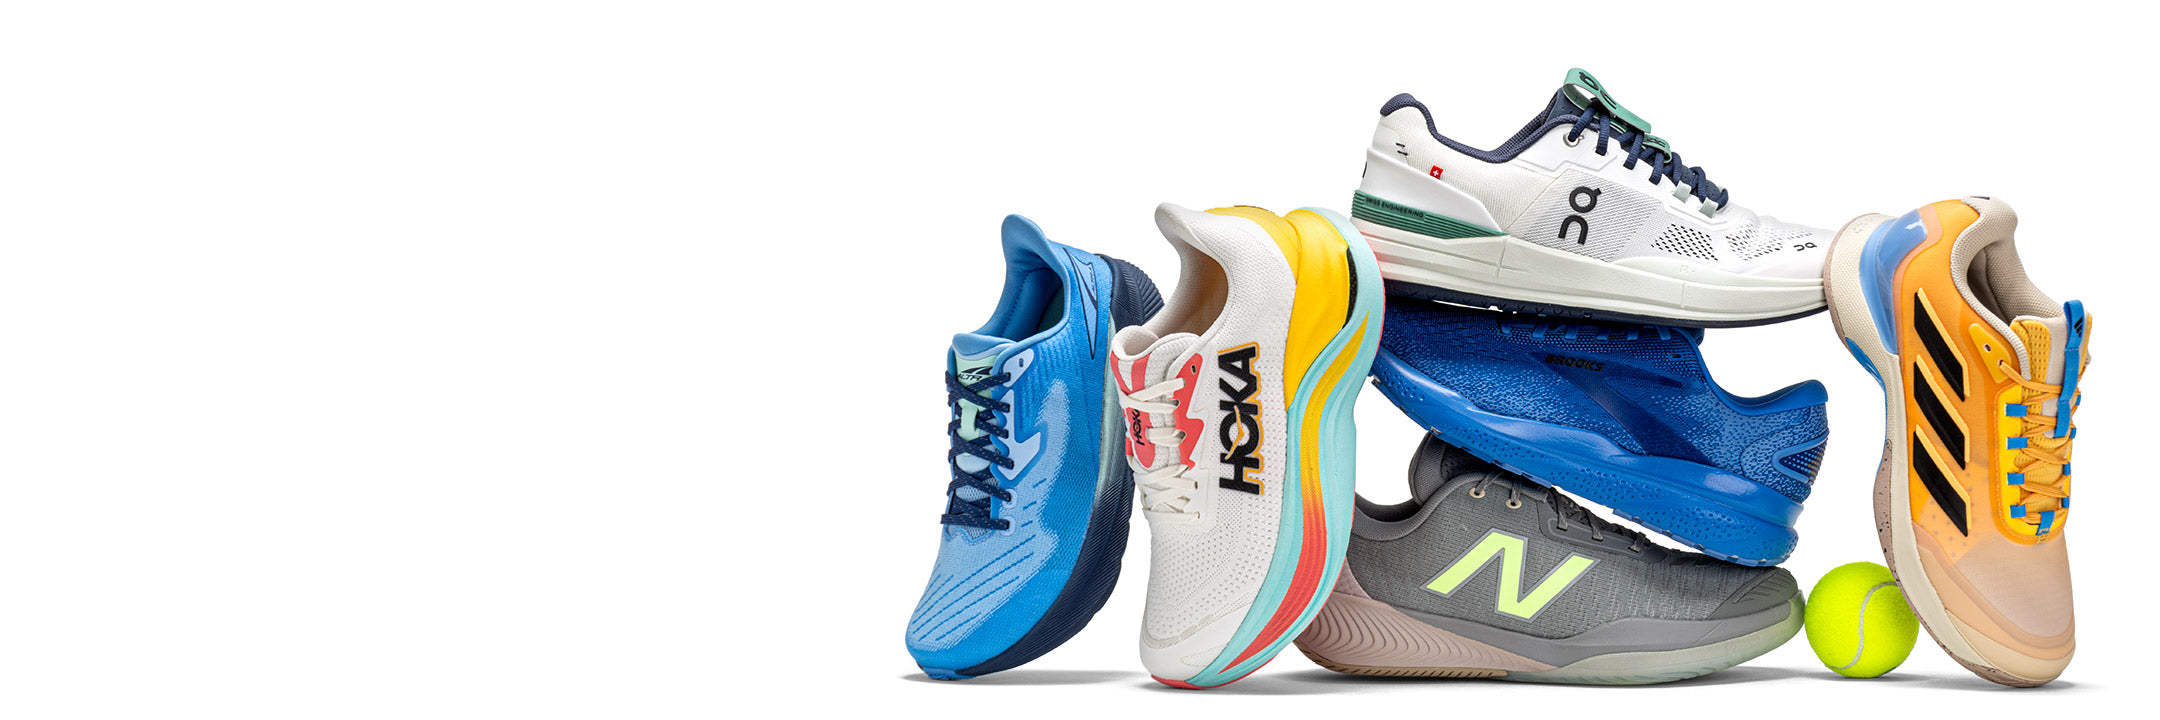 altra-hoka-on-brooks-newbalance-adidas-tennis-running-shoes-desktop-hero